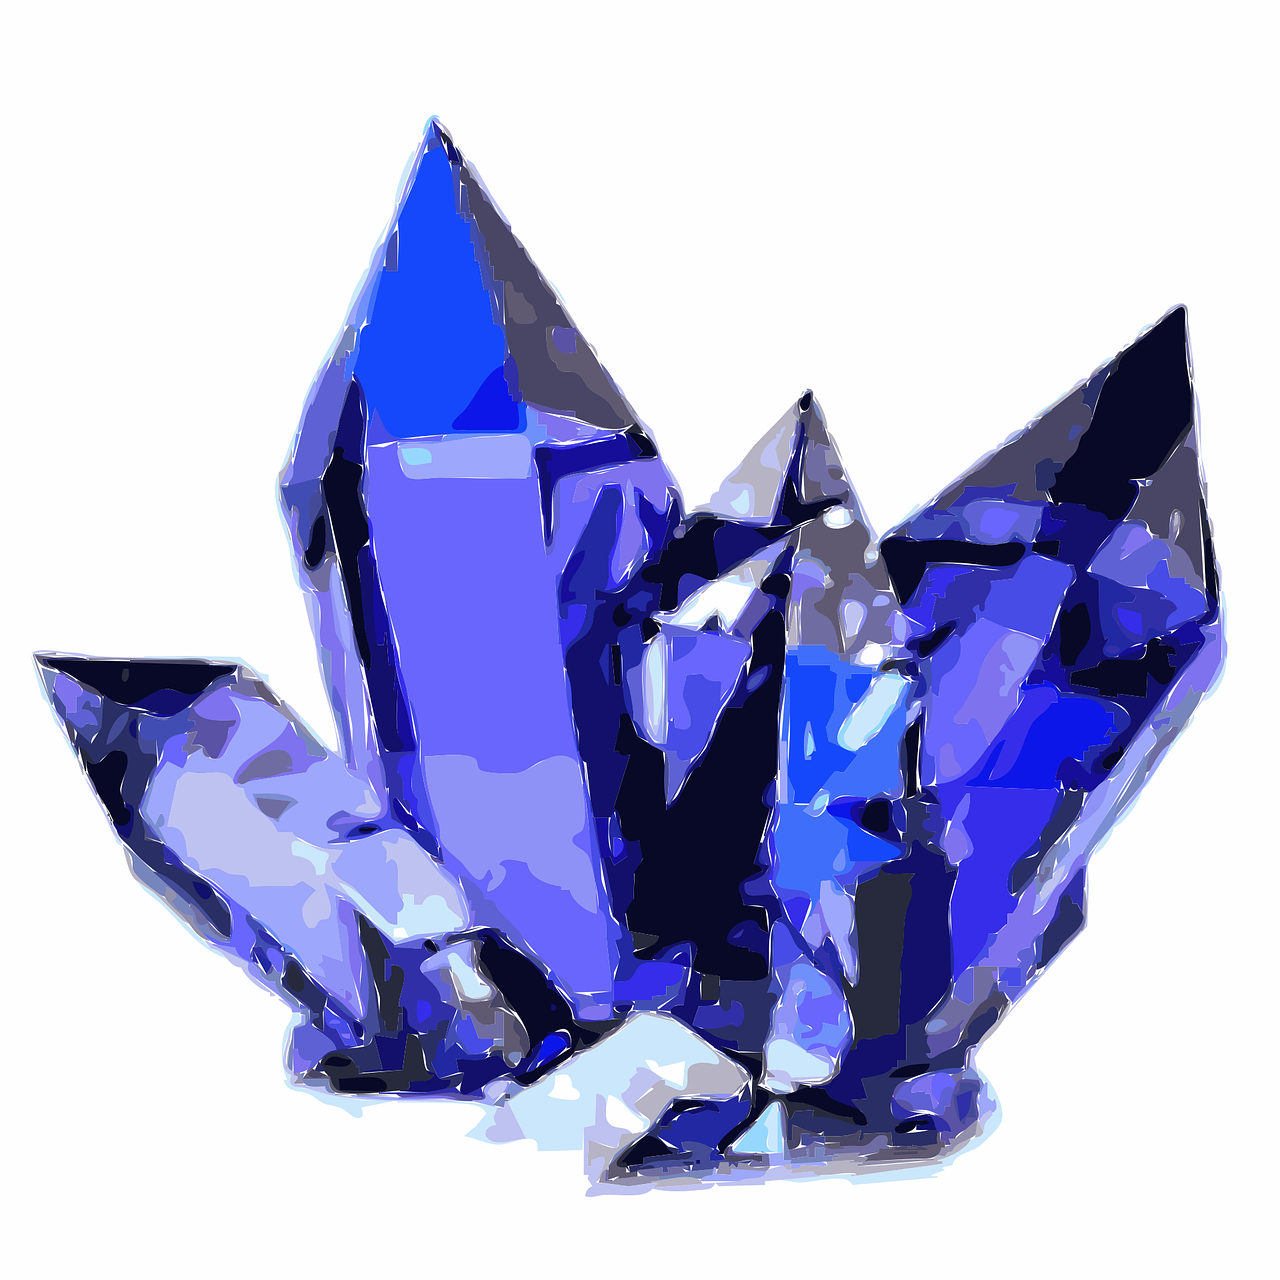 crystals sharp using free photo